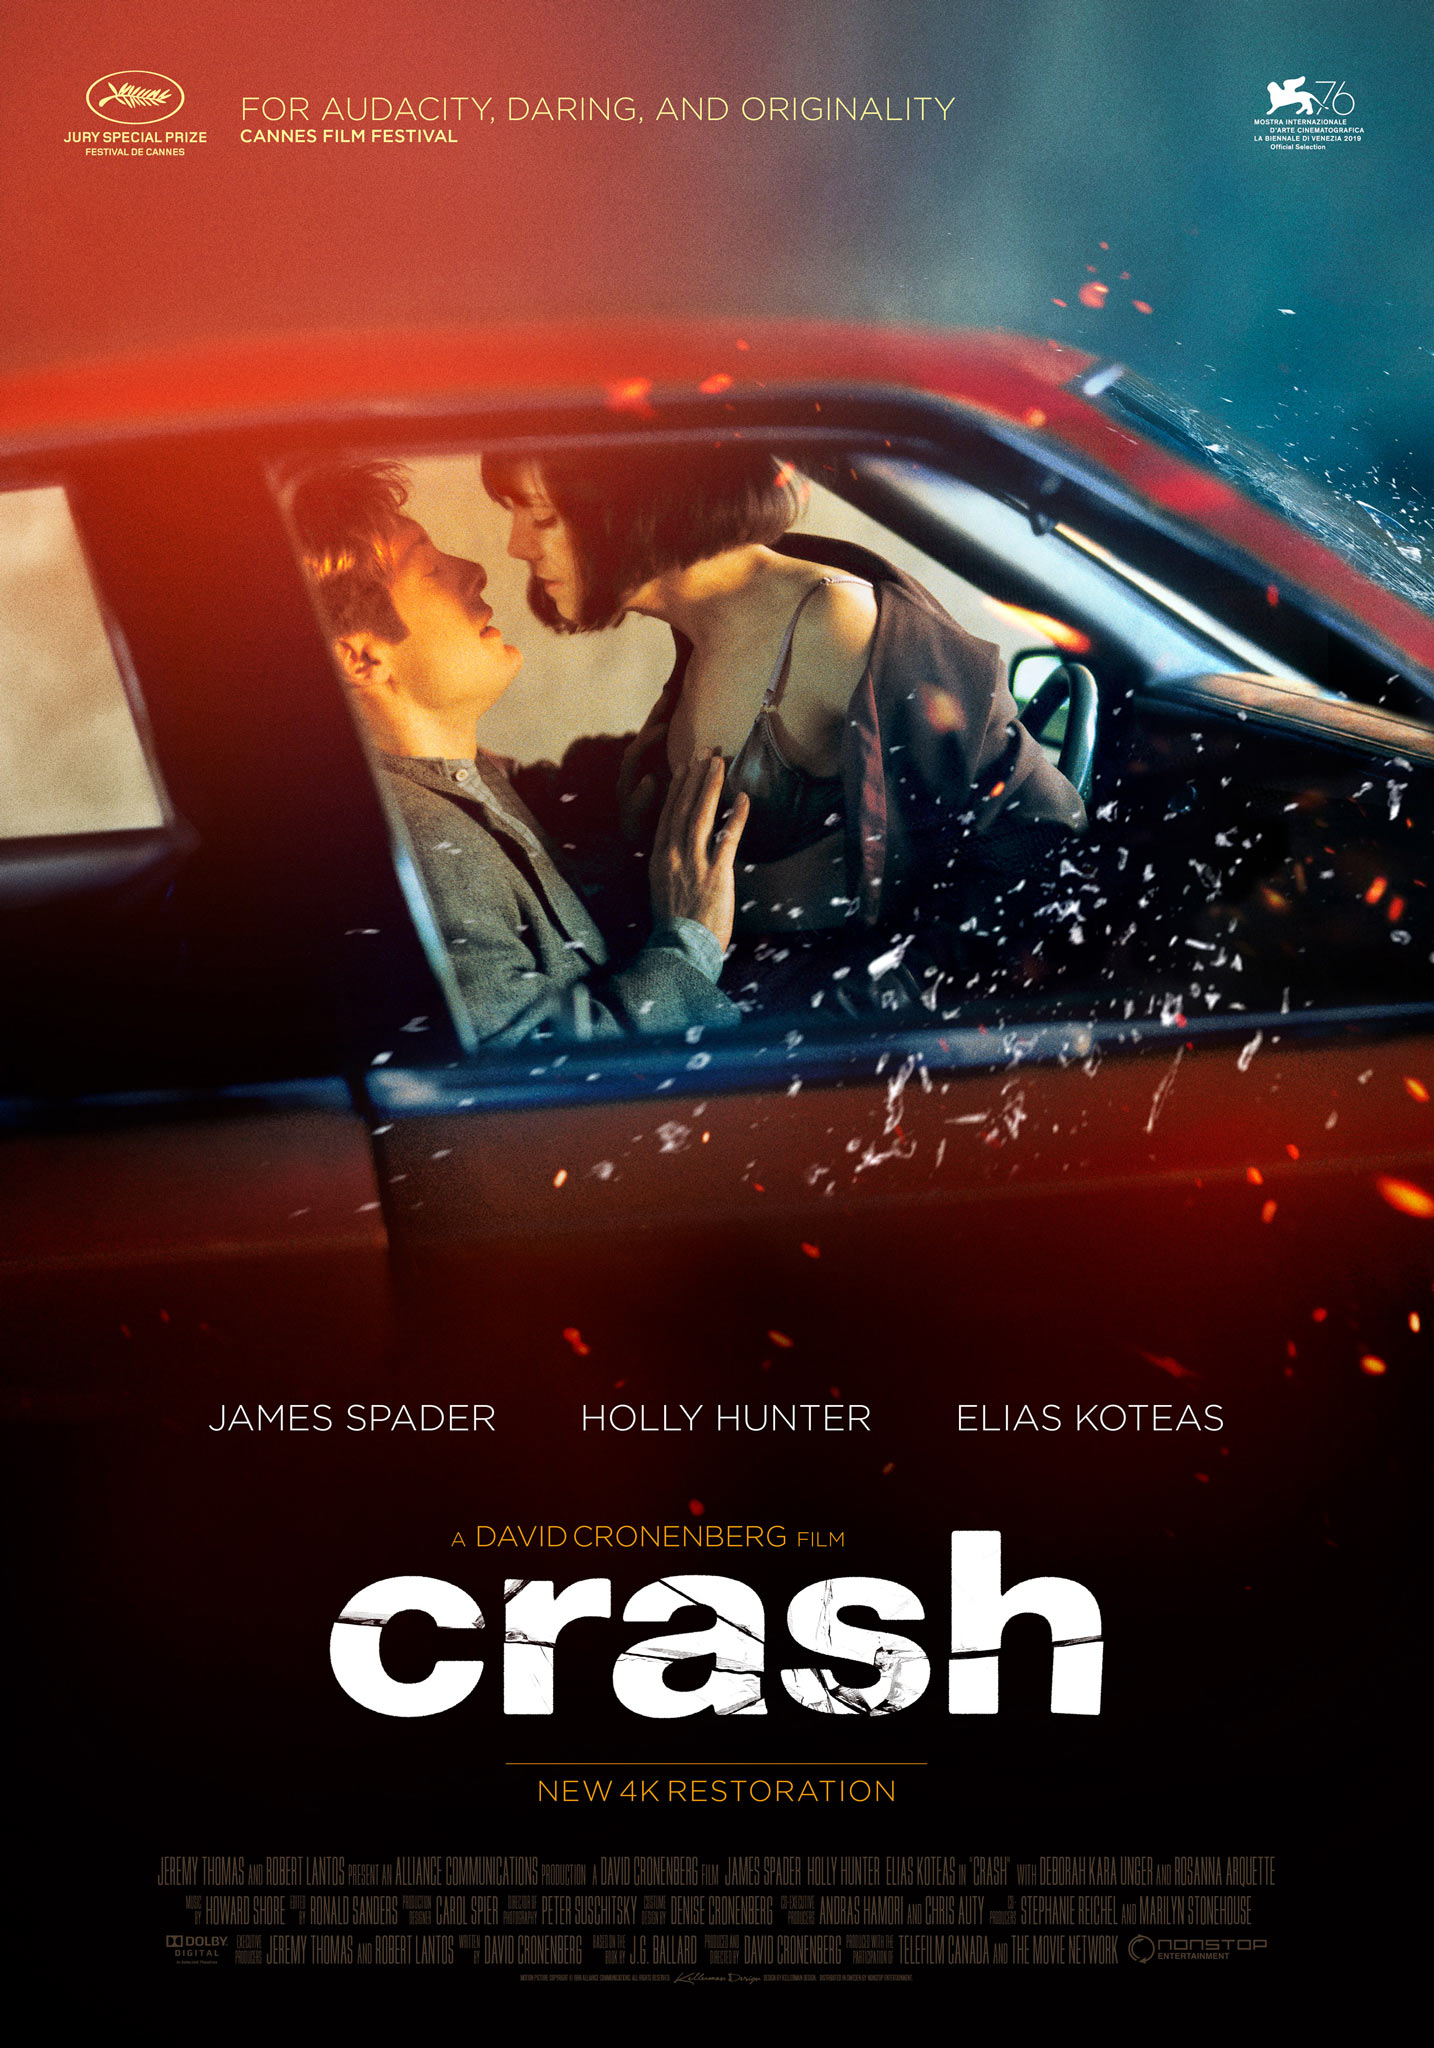 Crash (1996) theatrical onesheet